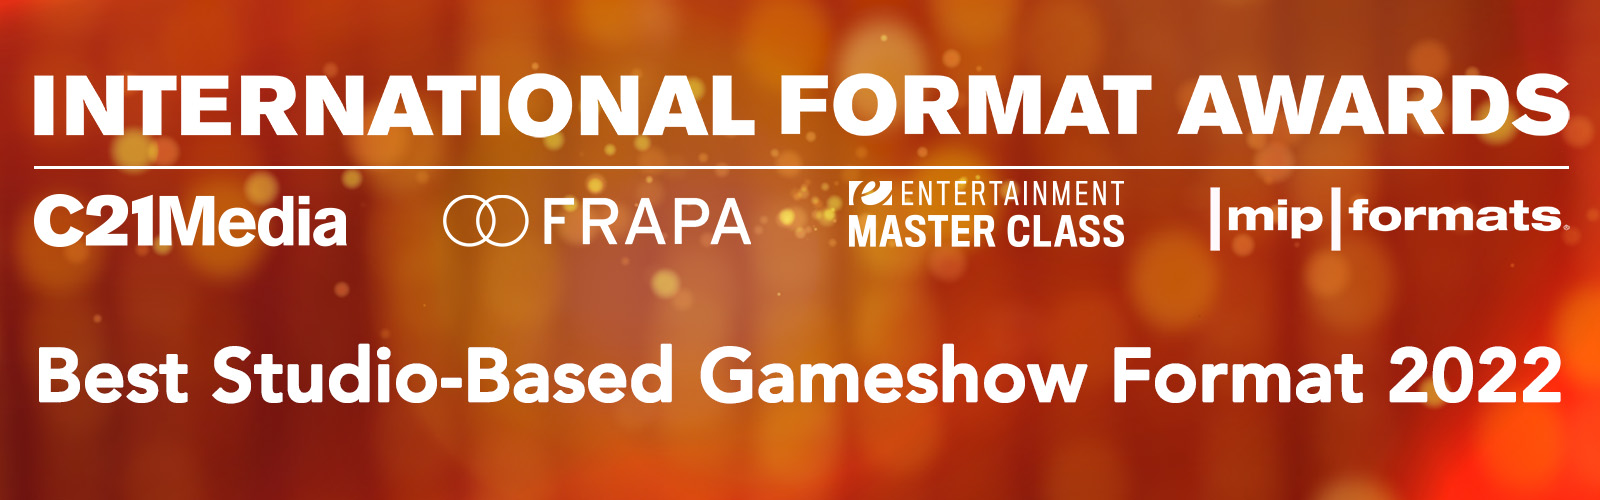 IFA 2022 - Best Studio-Based Gameshow Format Banner